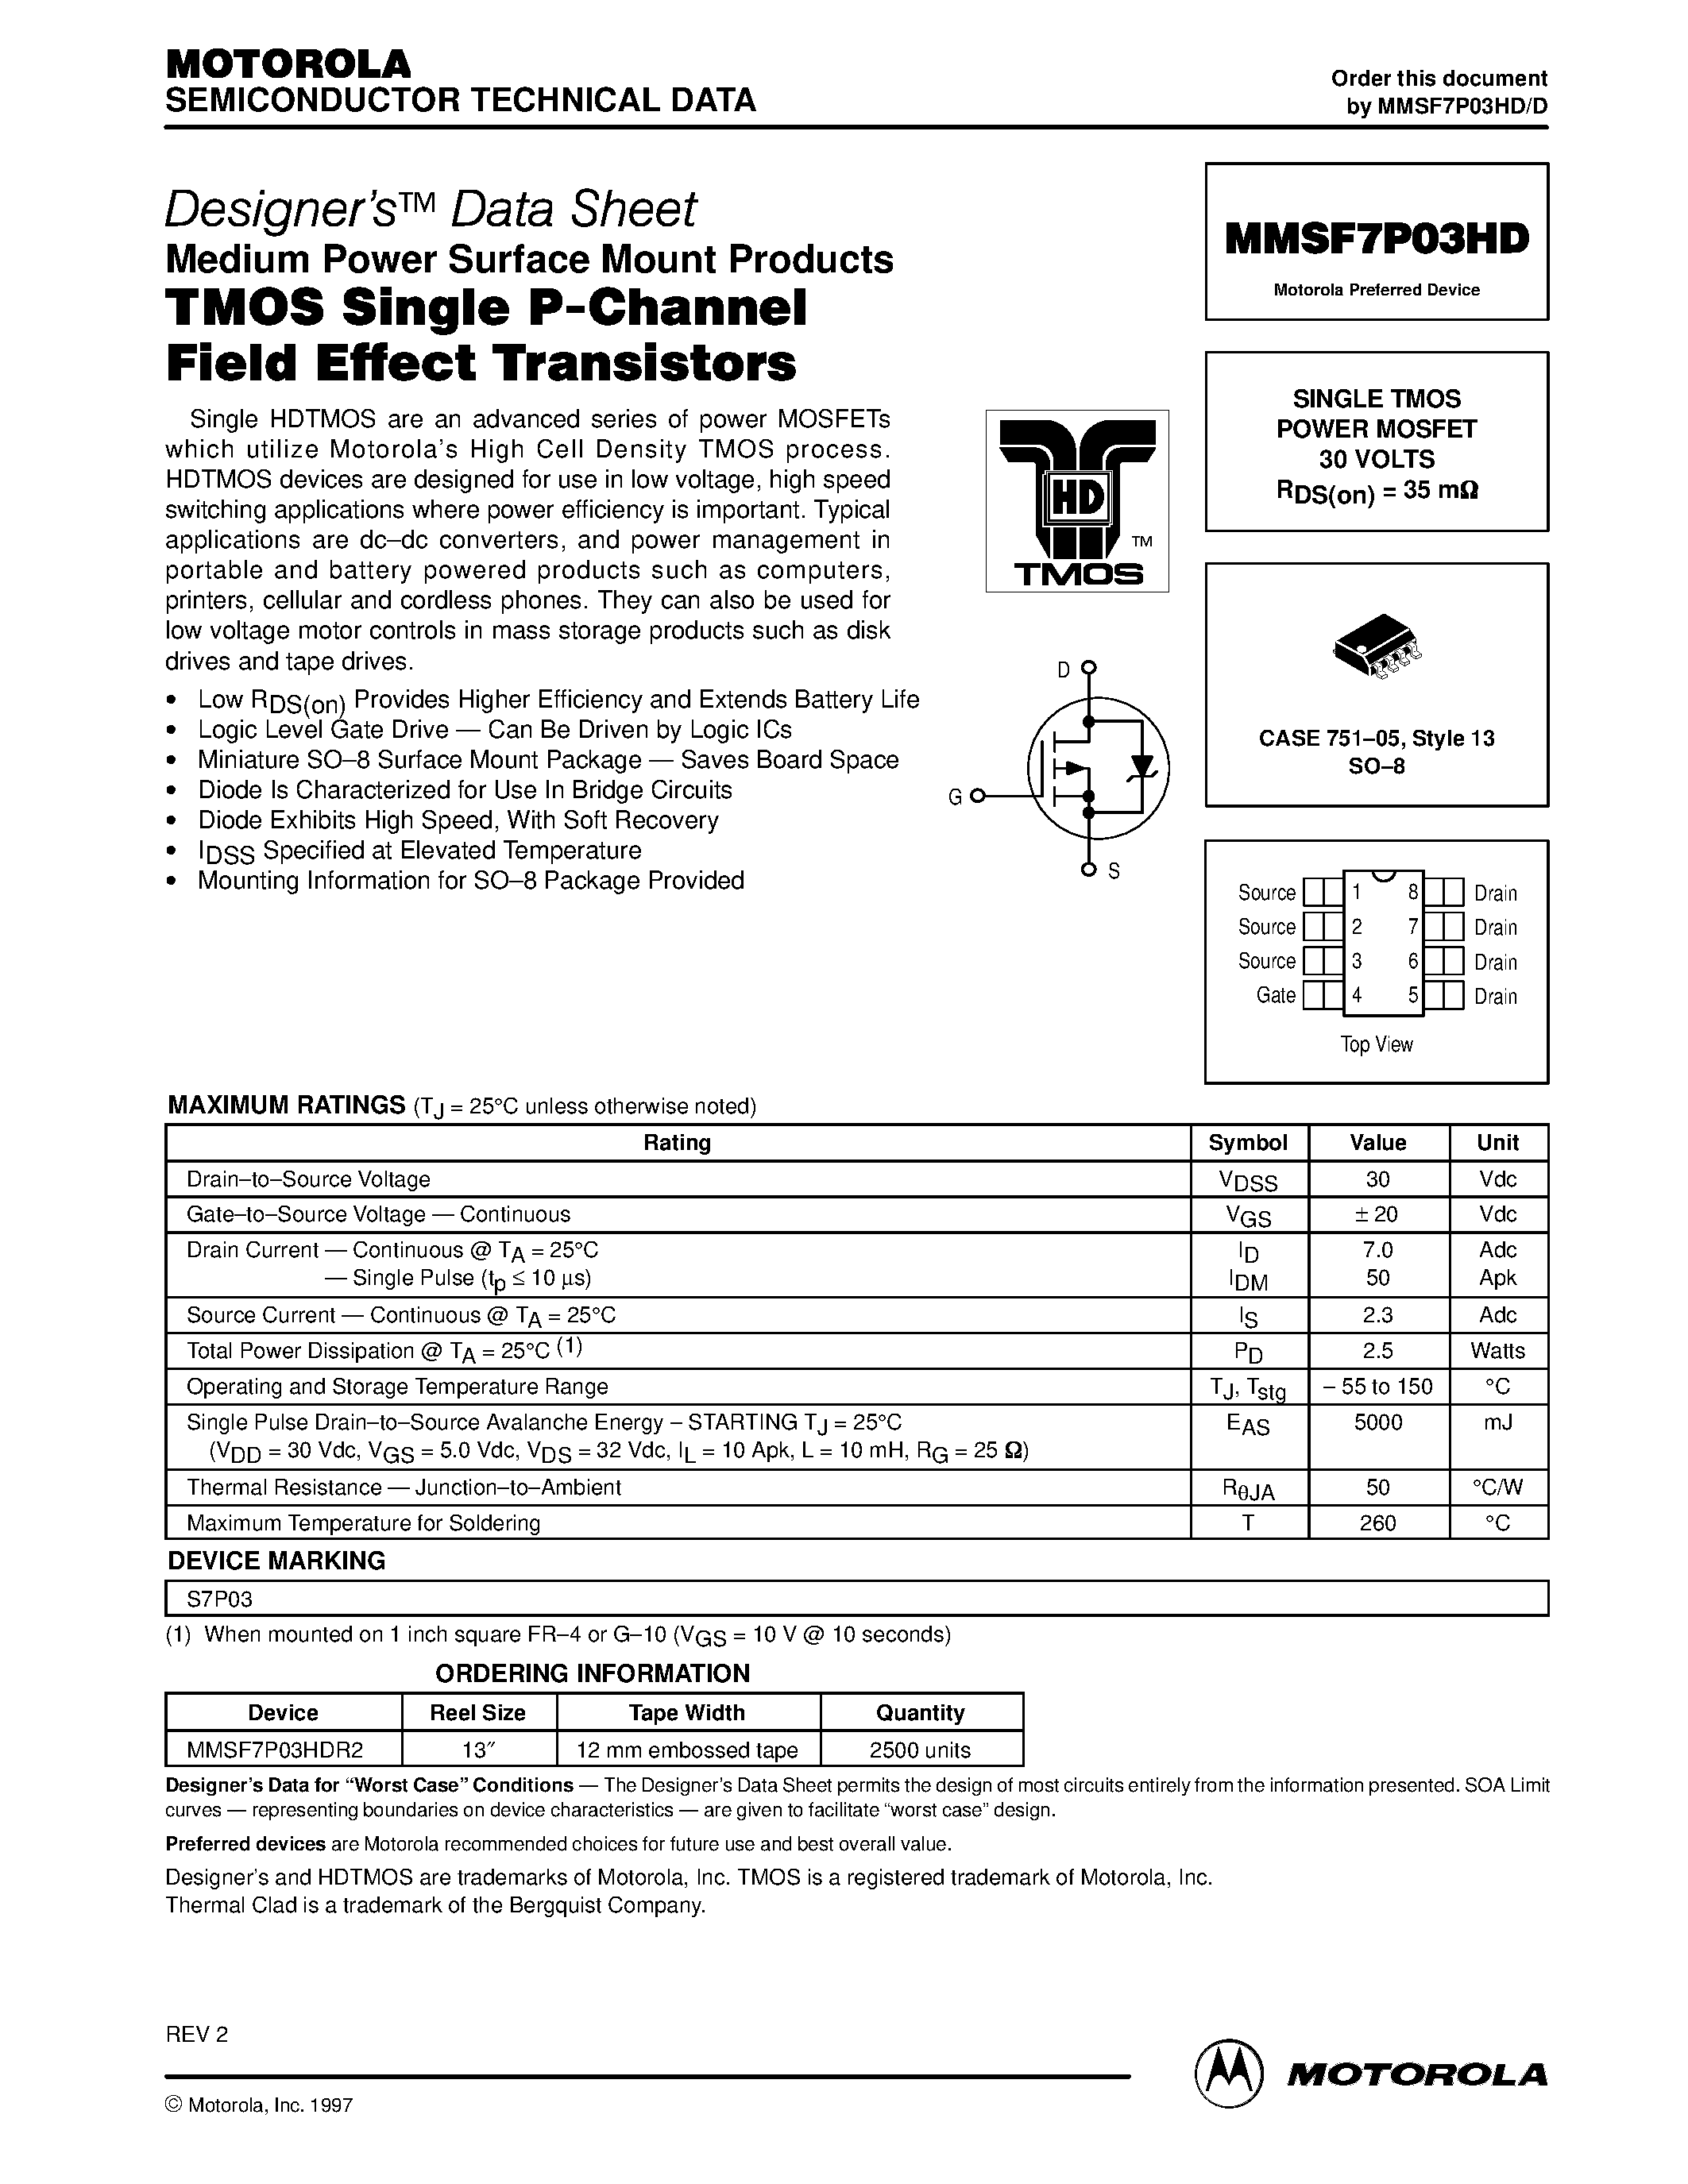 Даташит MMSF7P03HD - SINGLE TMOS POWER MOSFET 30 VOLTS страница 1